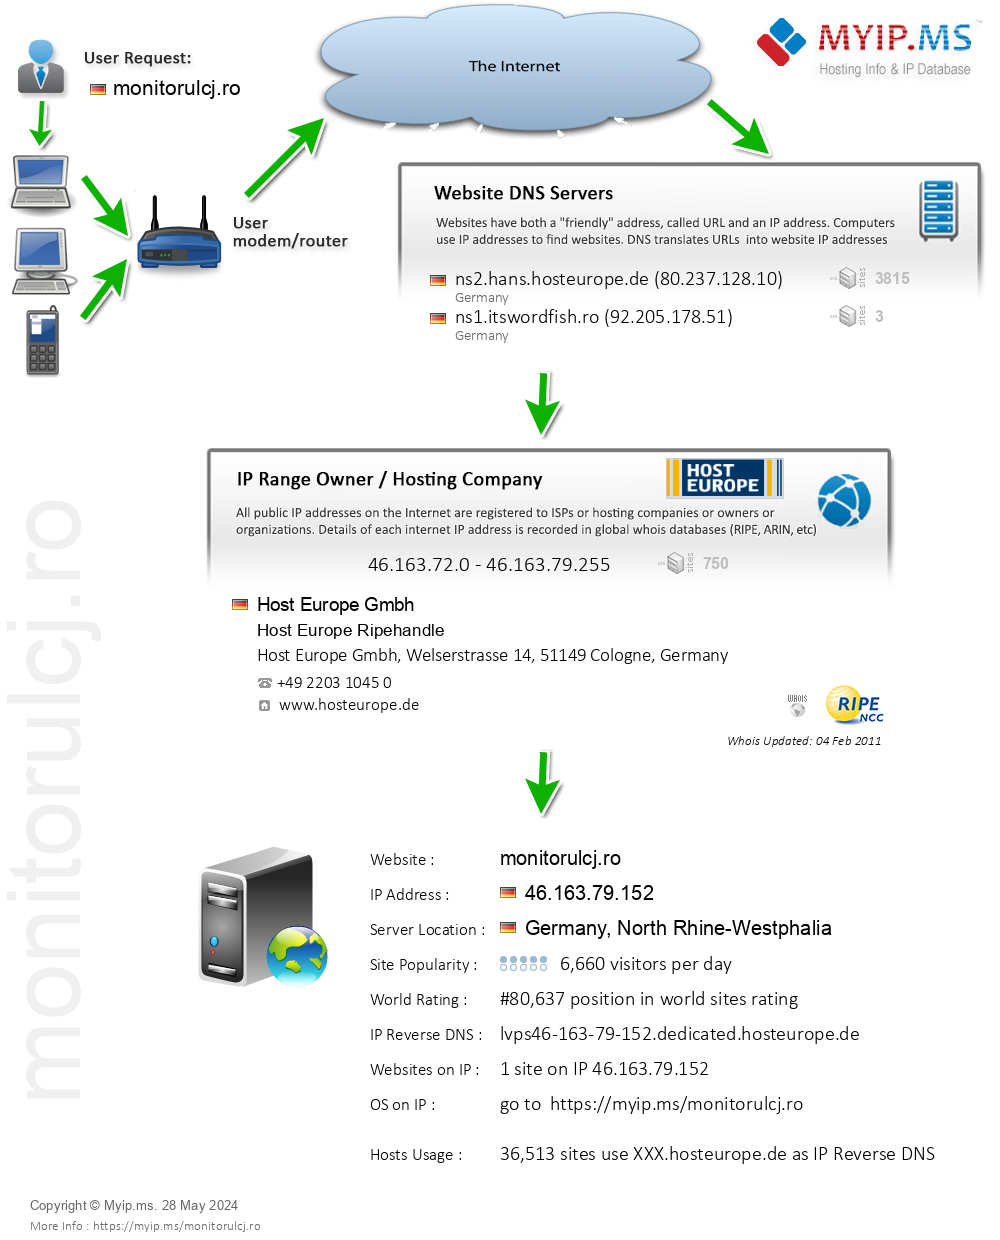 Monitorulcj.ro - Website Hosting Visual IP Diagram